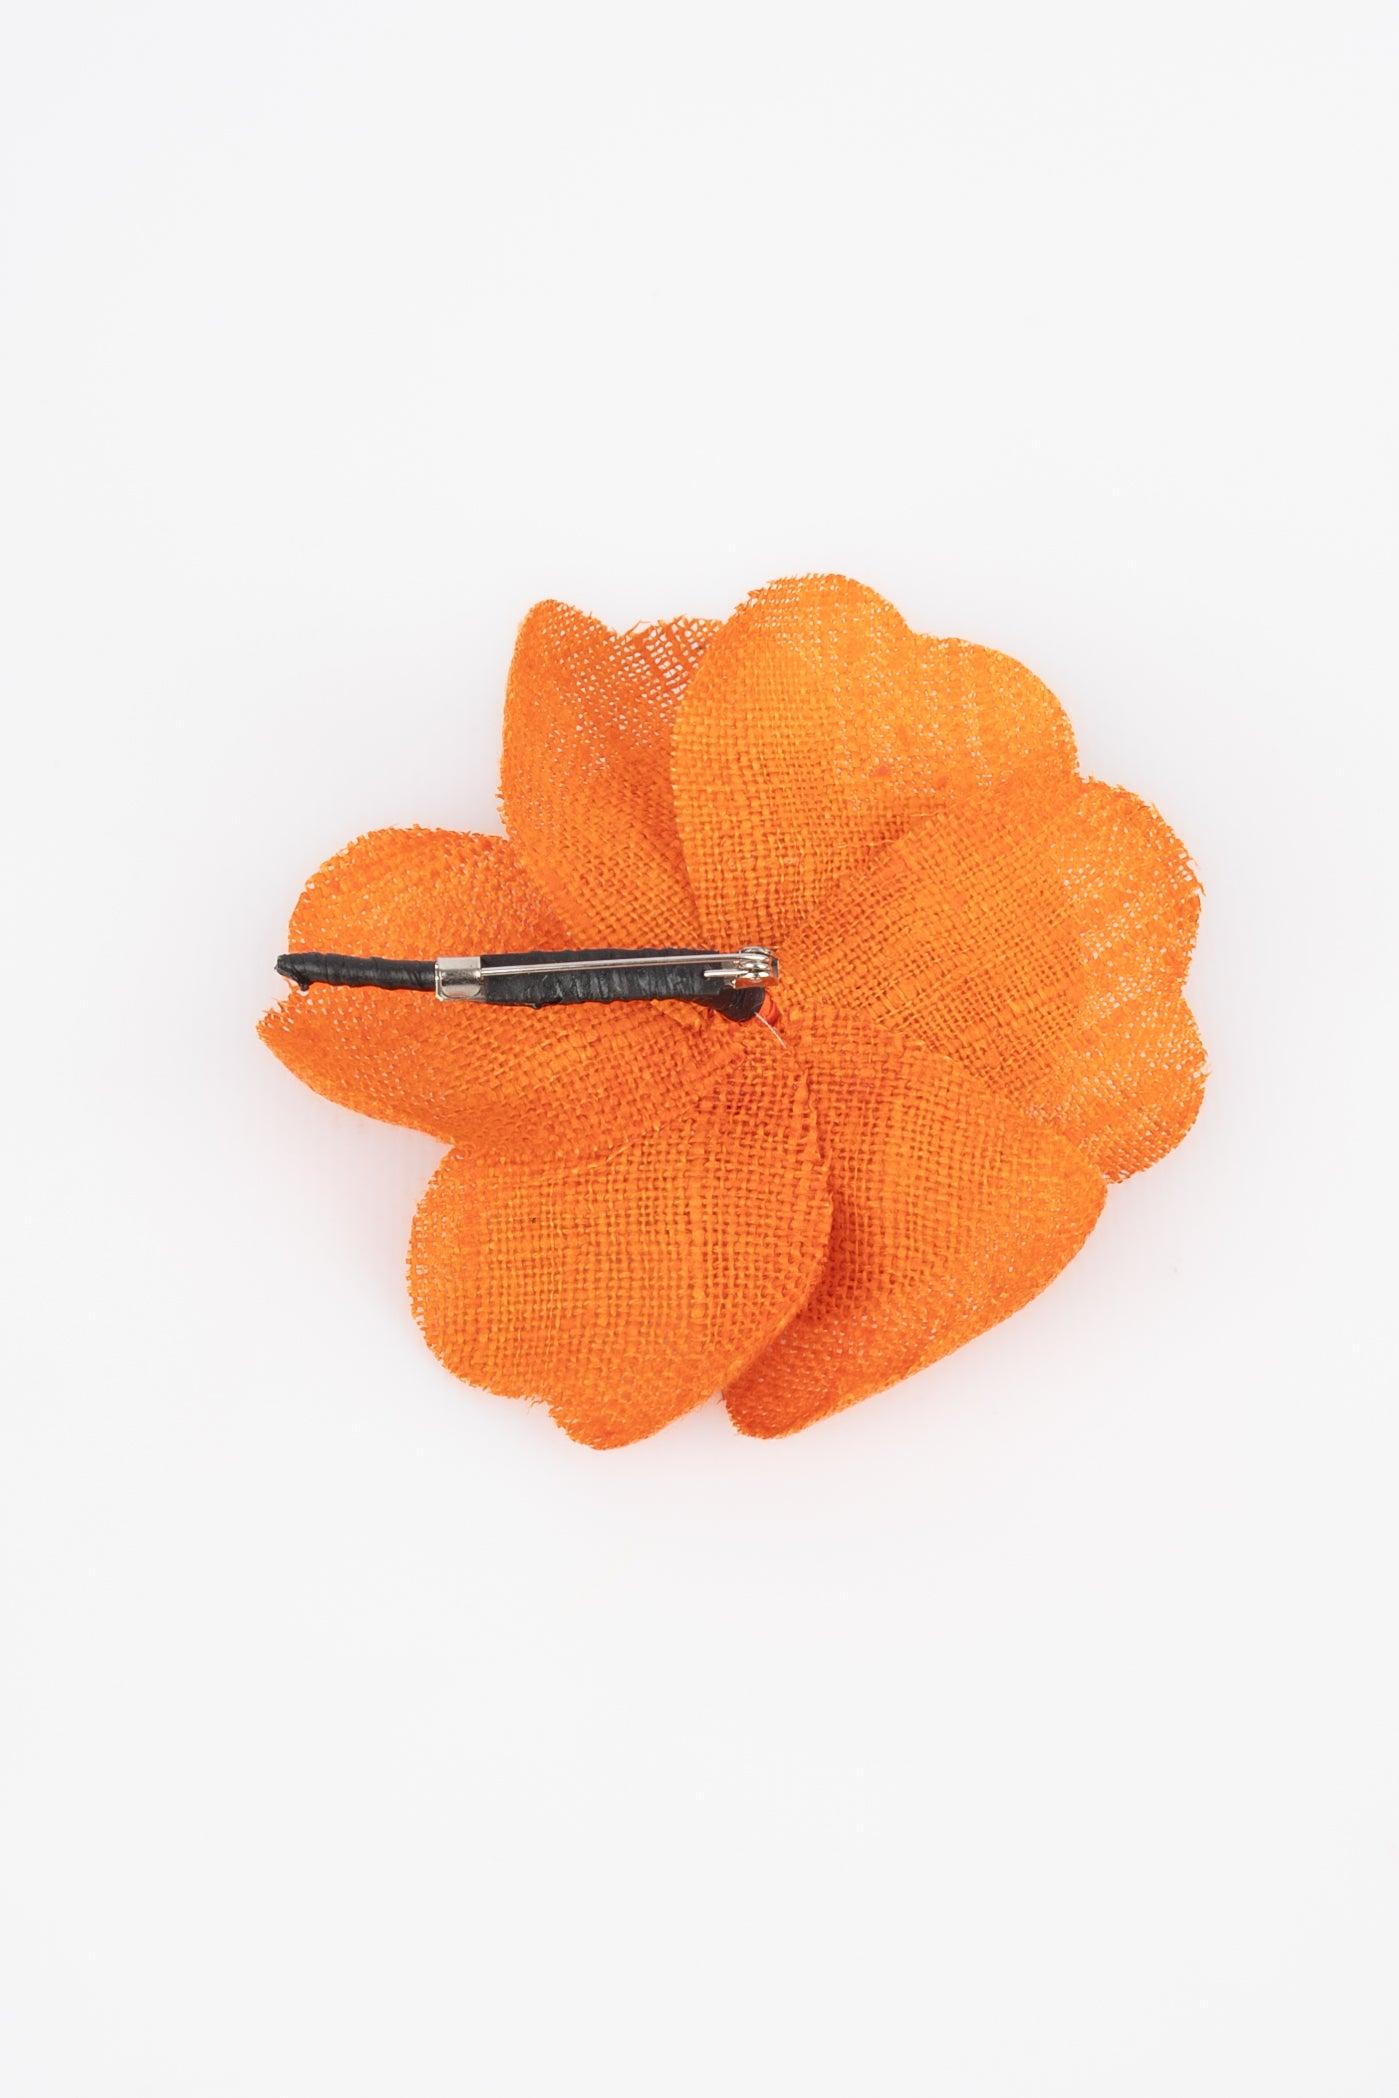 Chanel Orange Camellia Brooch In Good Condition For Sale In SAINT-OUEN-SUR-SEINE, FR